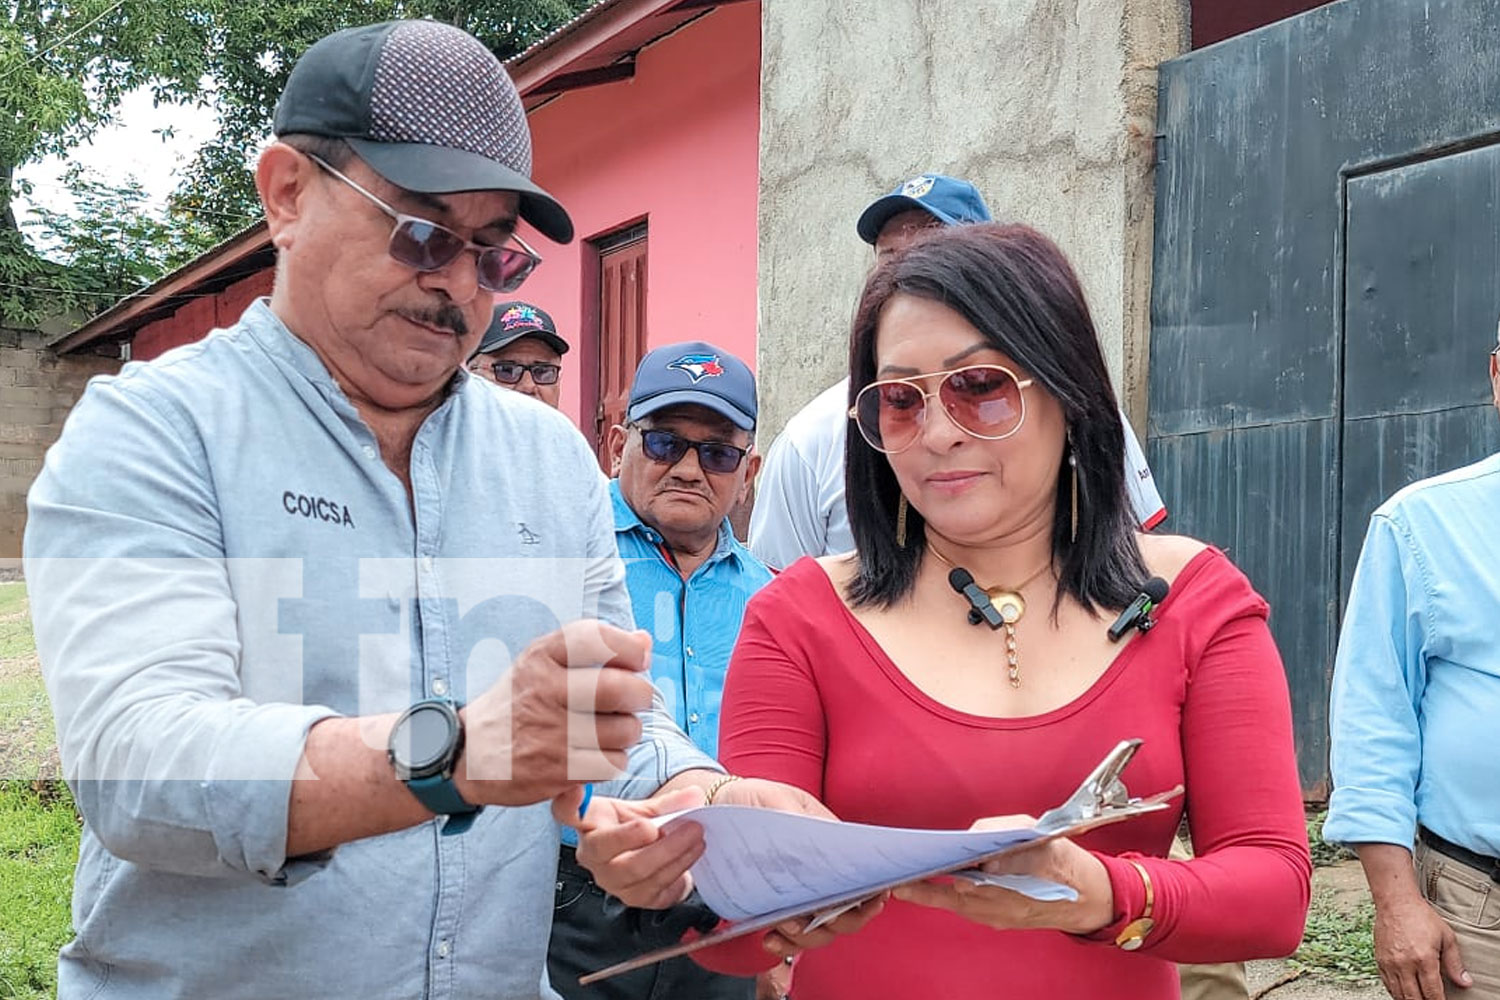 Alcaldía de Ocotal y COICSA firman acta para adoquinado de calles